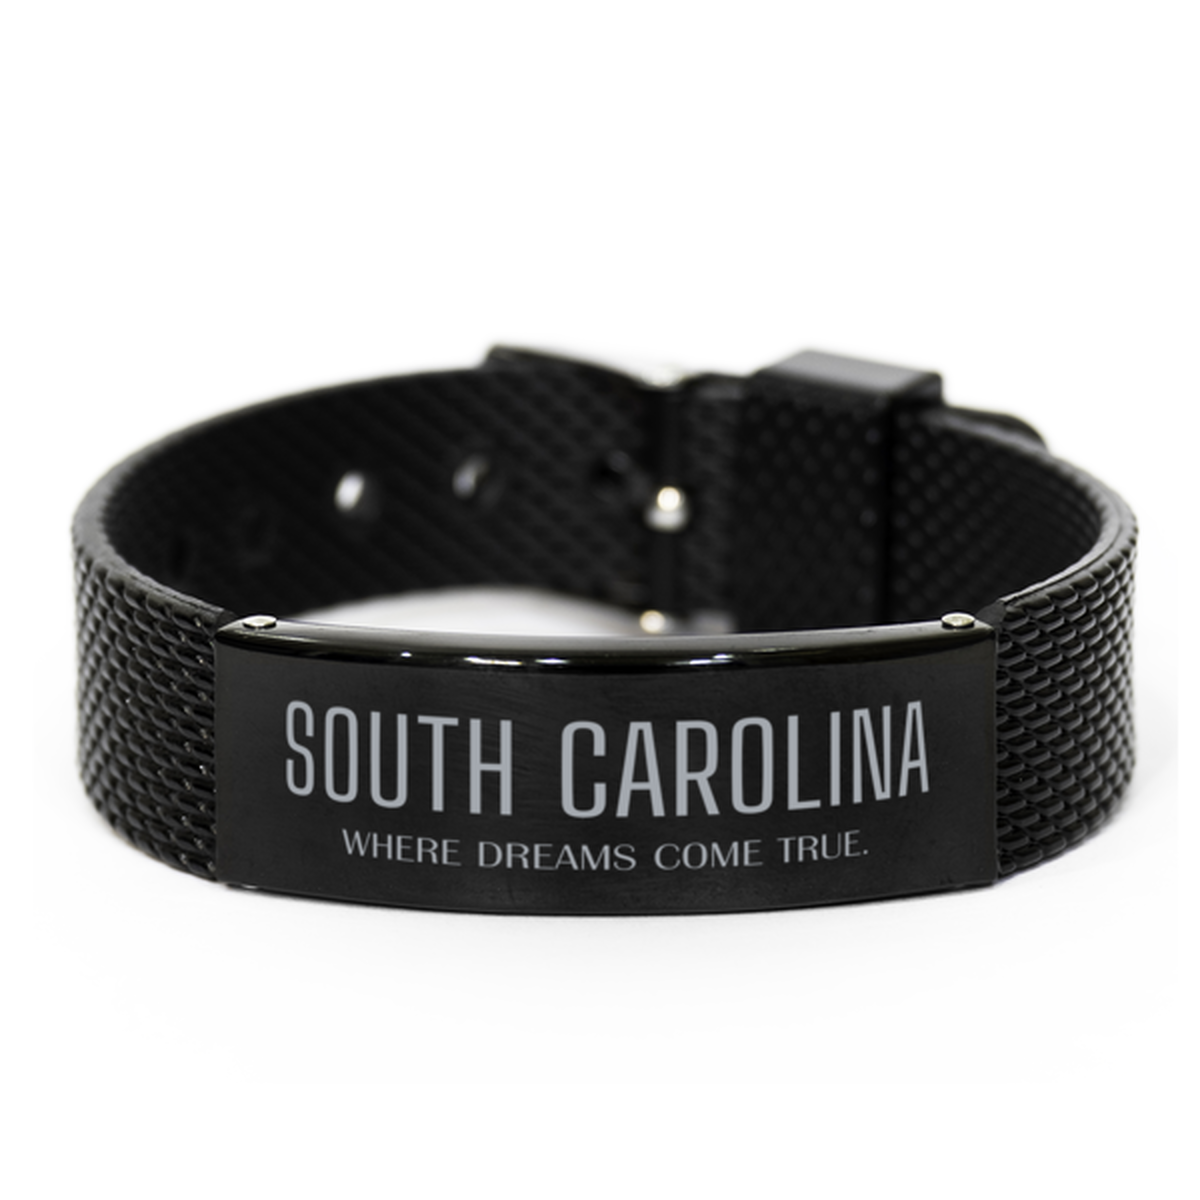 Love South Carolina State Black Shark Mesh Bracelet, South Carolina Where dreams come true, Birthday Inspirational Gifts For South Carolina Men, Women, Friends